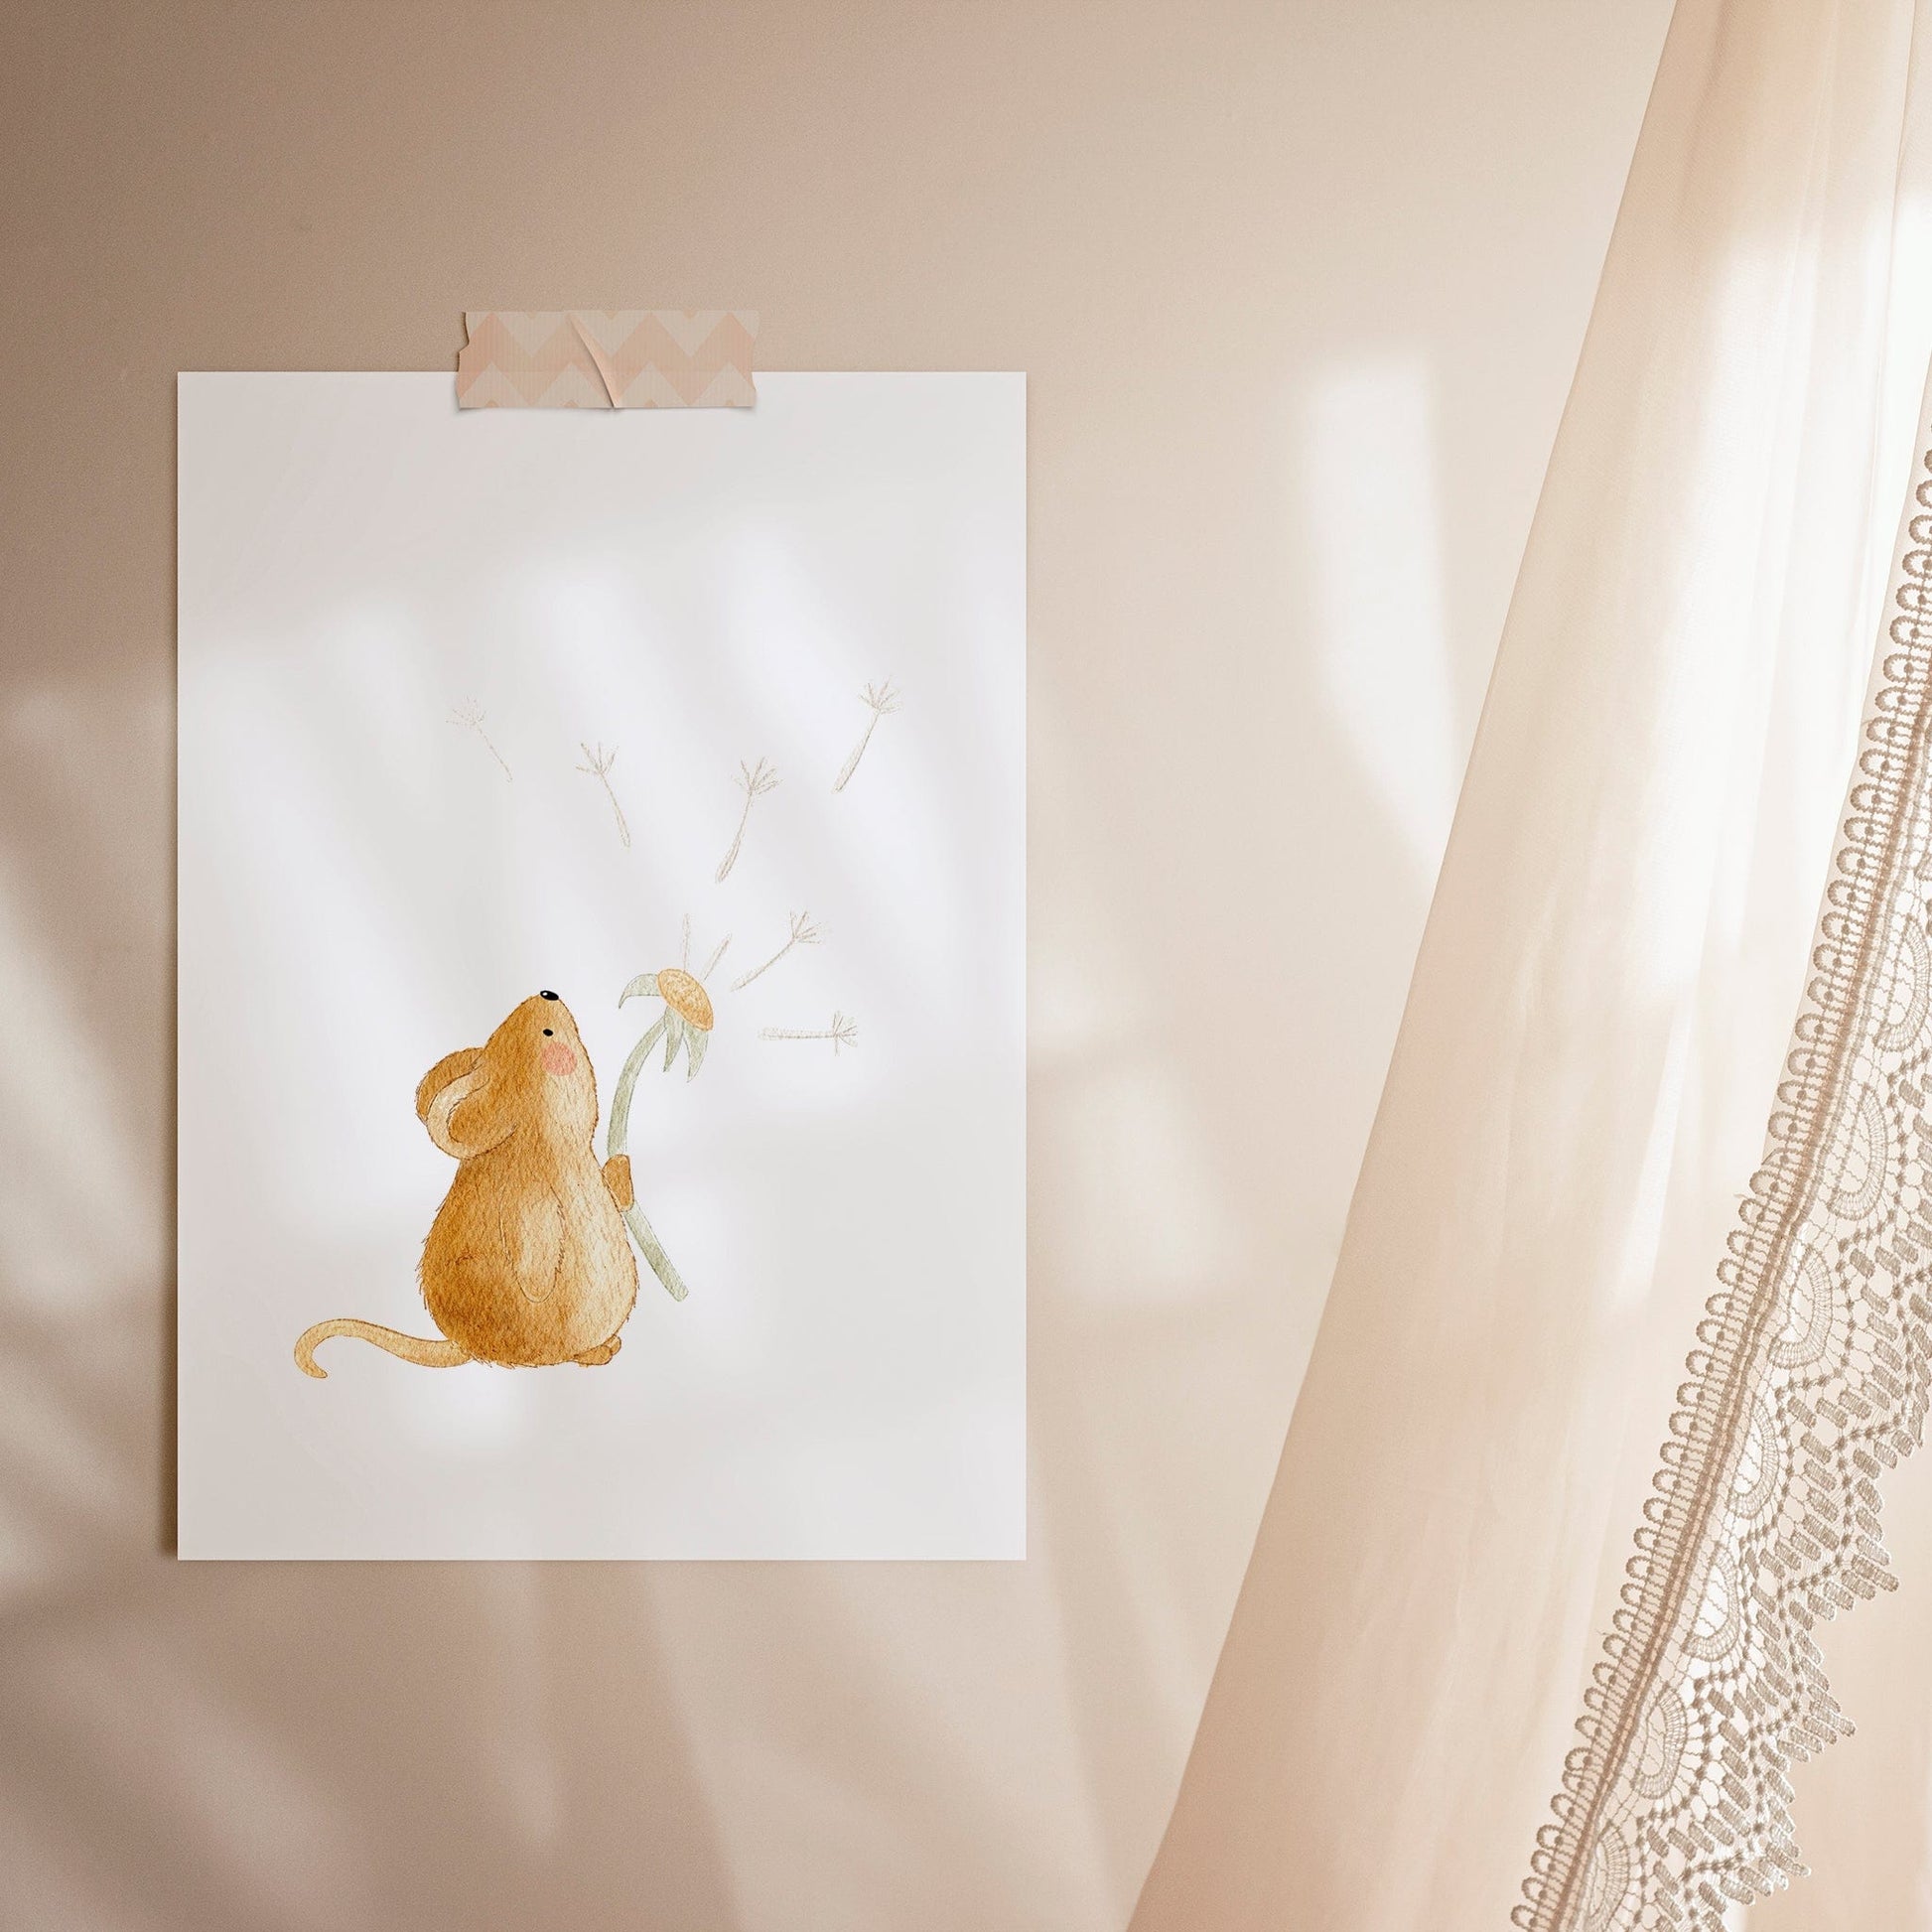 Kotenkram Poster Poster 'Maus mit Pusteblume' | Kinderzimmer Deko | DIN A4 oder A5